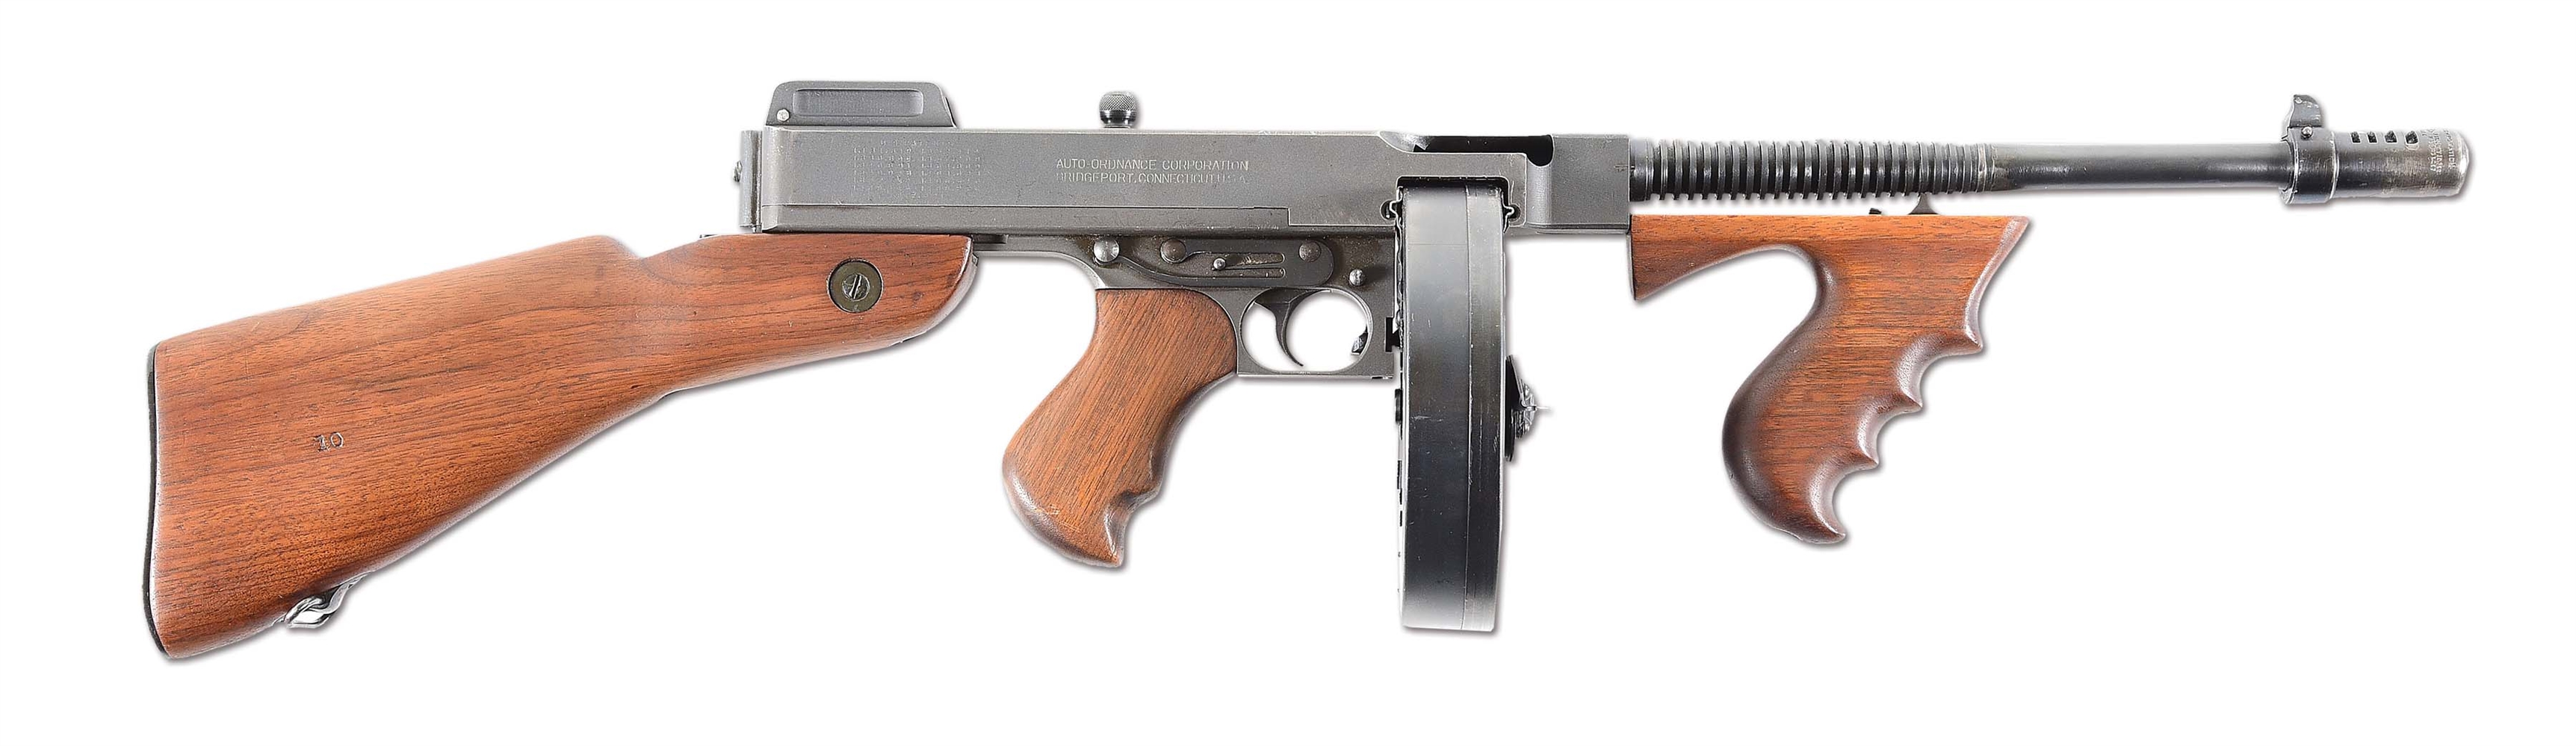 (N) FINE AUTO ORDNANCE 1928A1 THOMPSON MACHINE GUN WITH HARD CASE (CURIO AND RELIC).